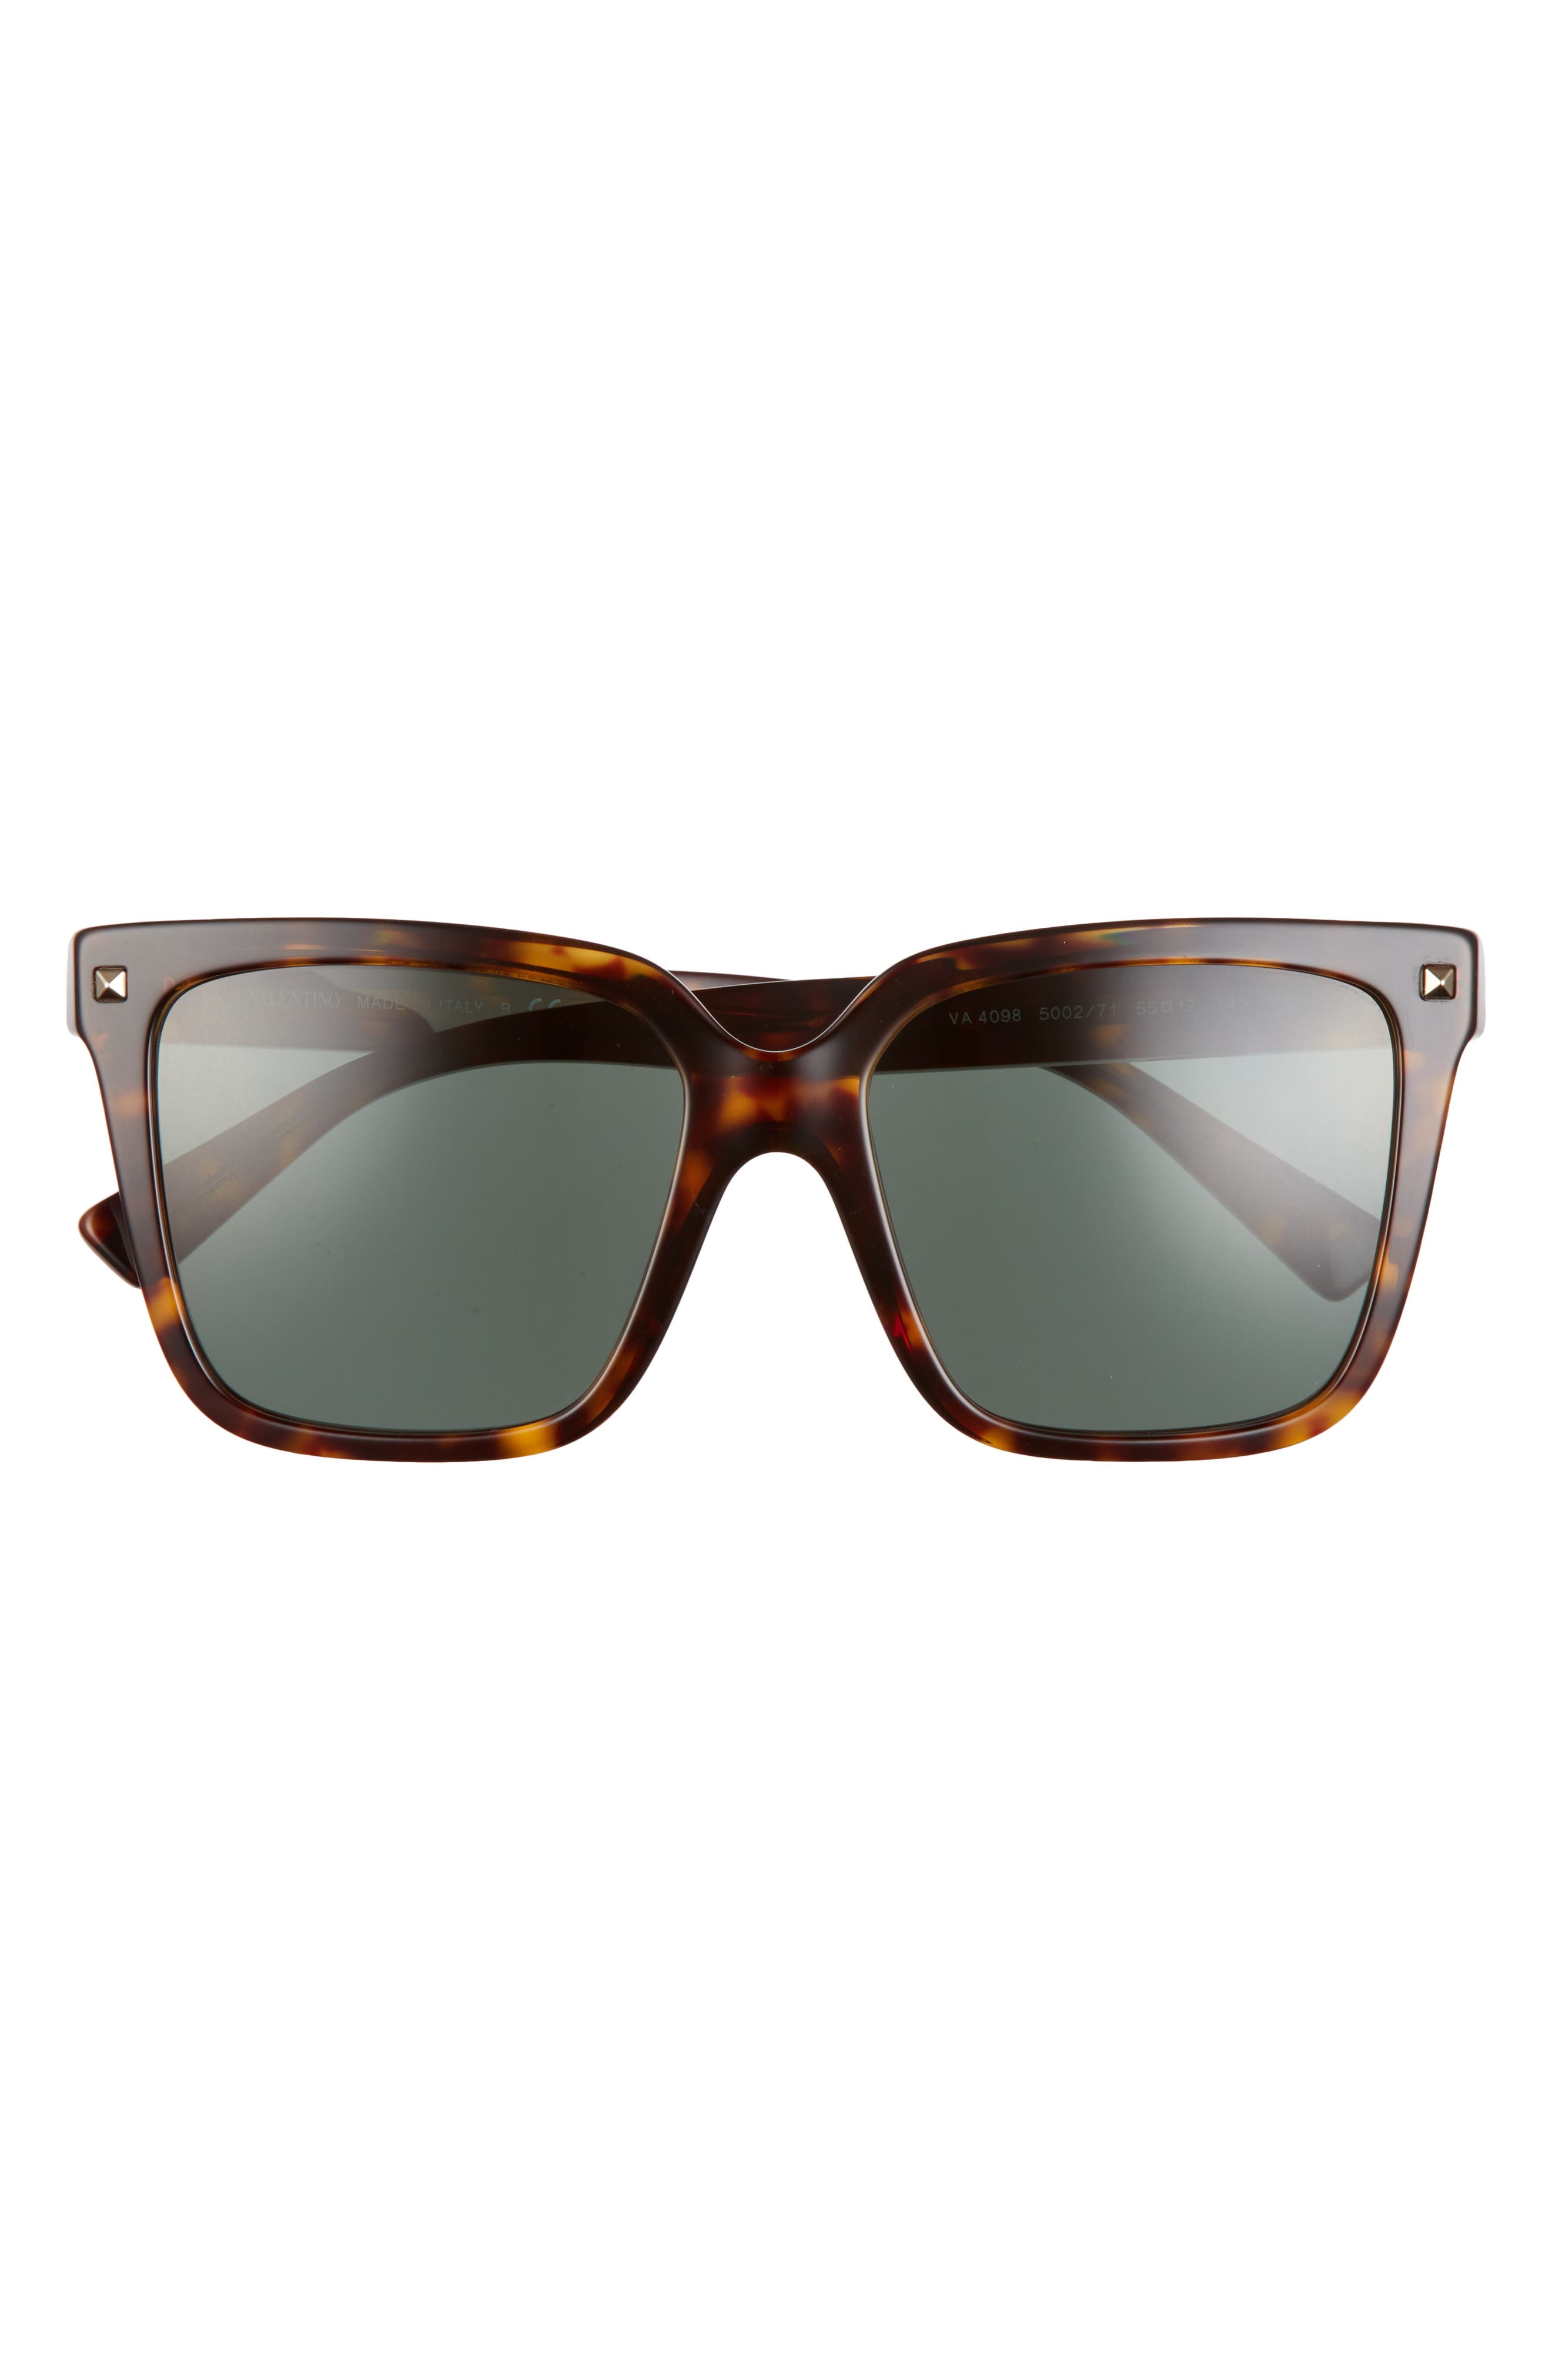 Valentino 55mm Square Sunglasses in Havana/Green at Nordstrom